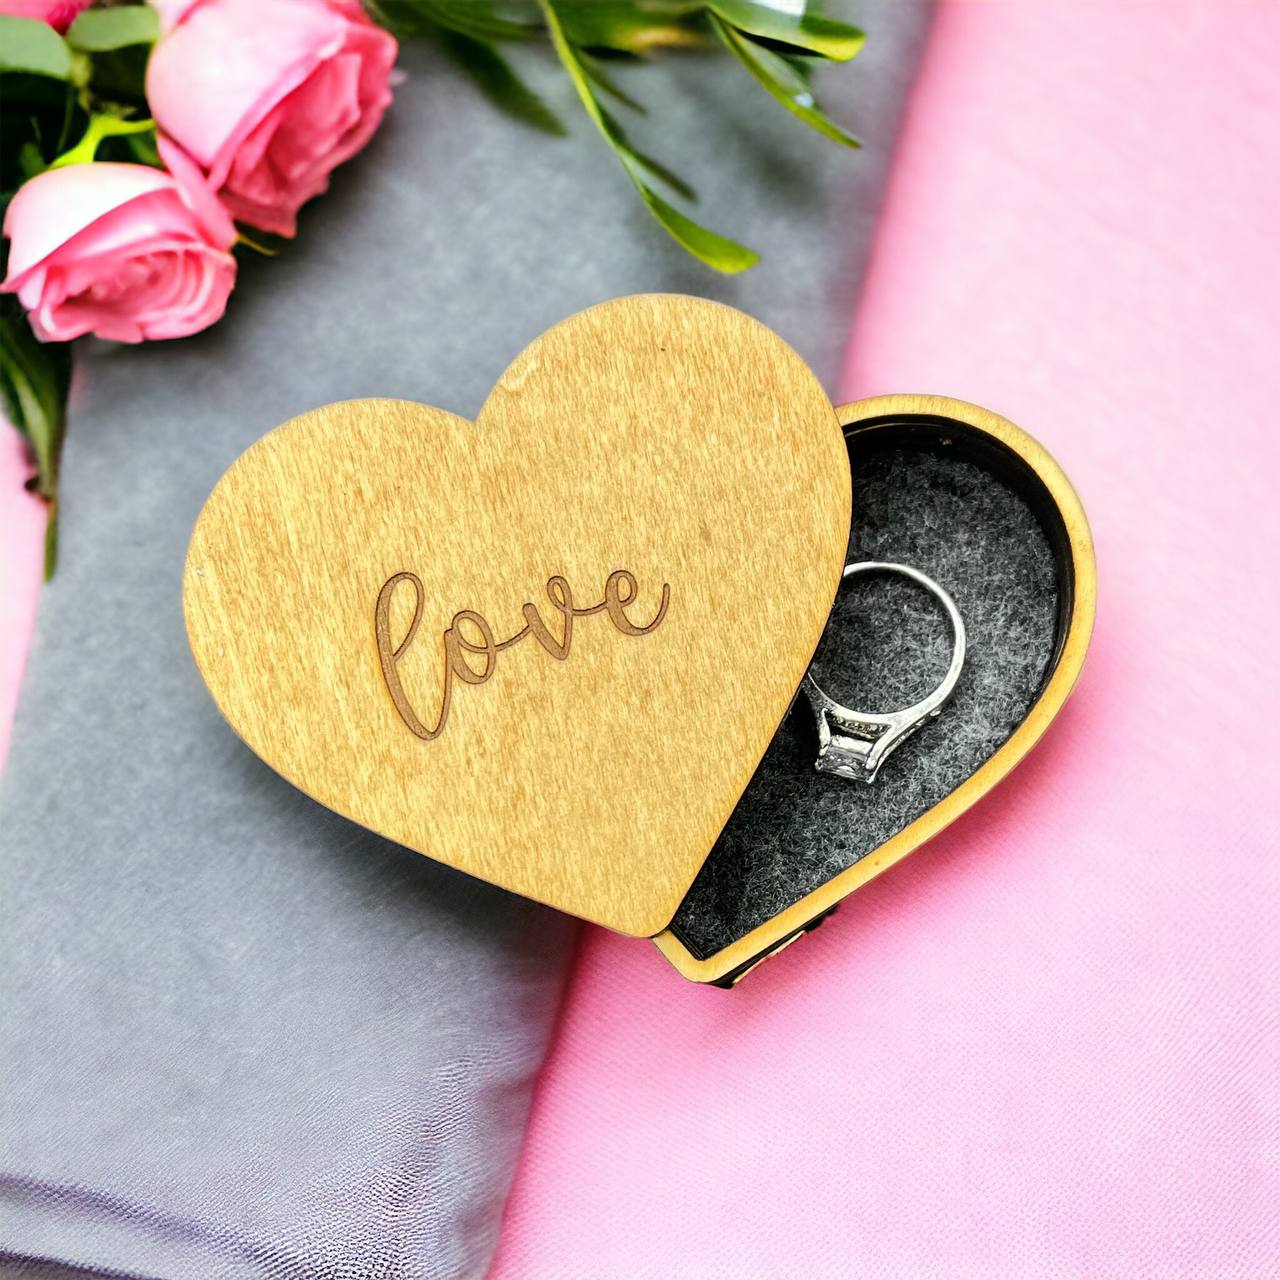 Personalized Heart Trinket Box